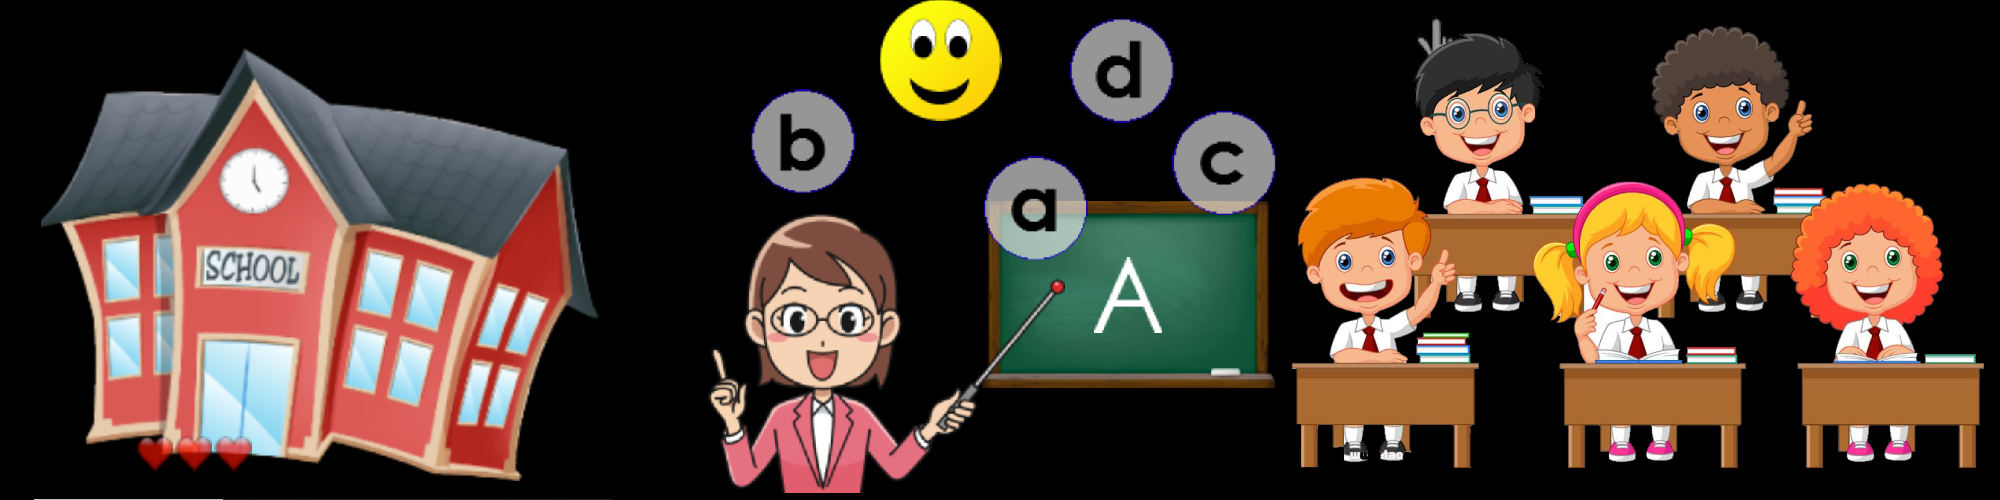 ABC Alphabet Game